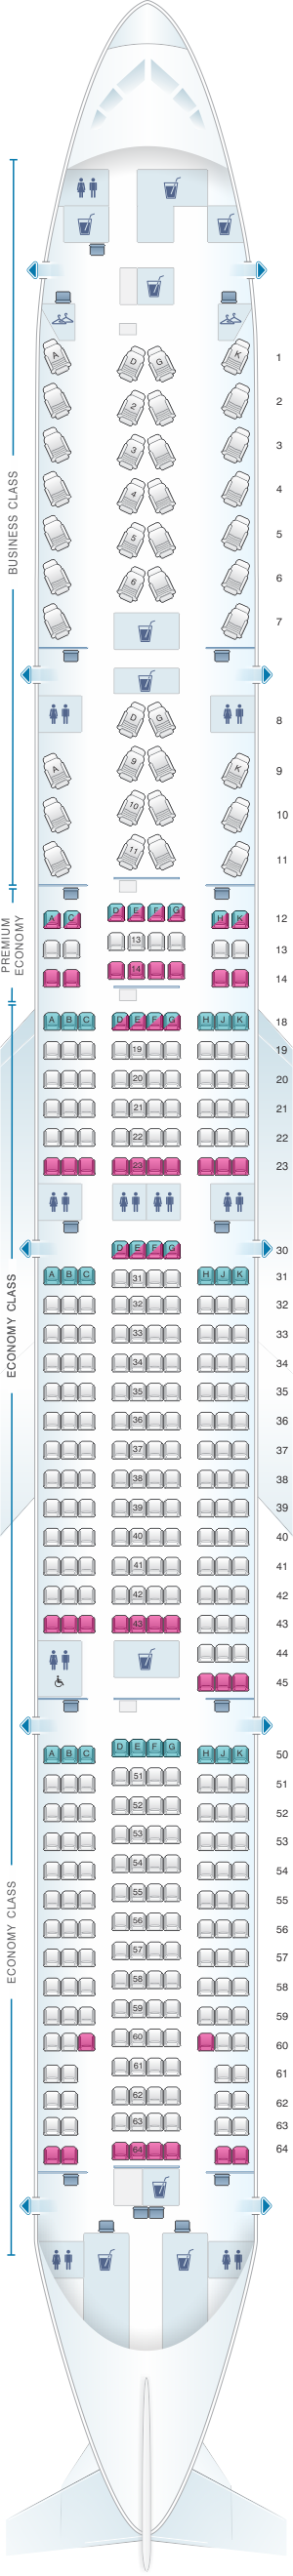 Air Canada Boeing 777 Seat Map Seat Map Air Canada Boeing B777 300ER (77W) International Layout 1 